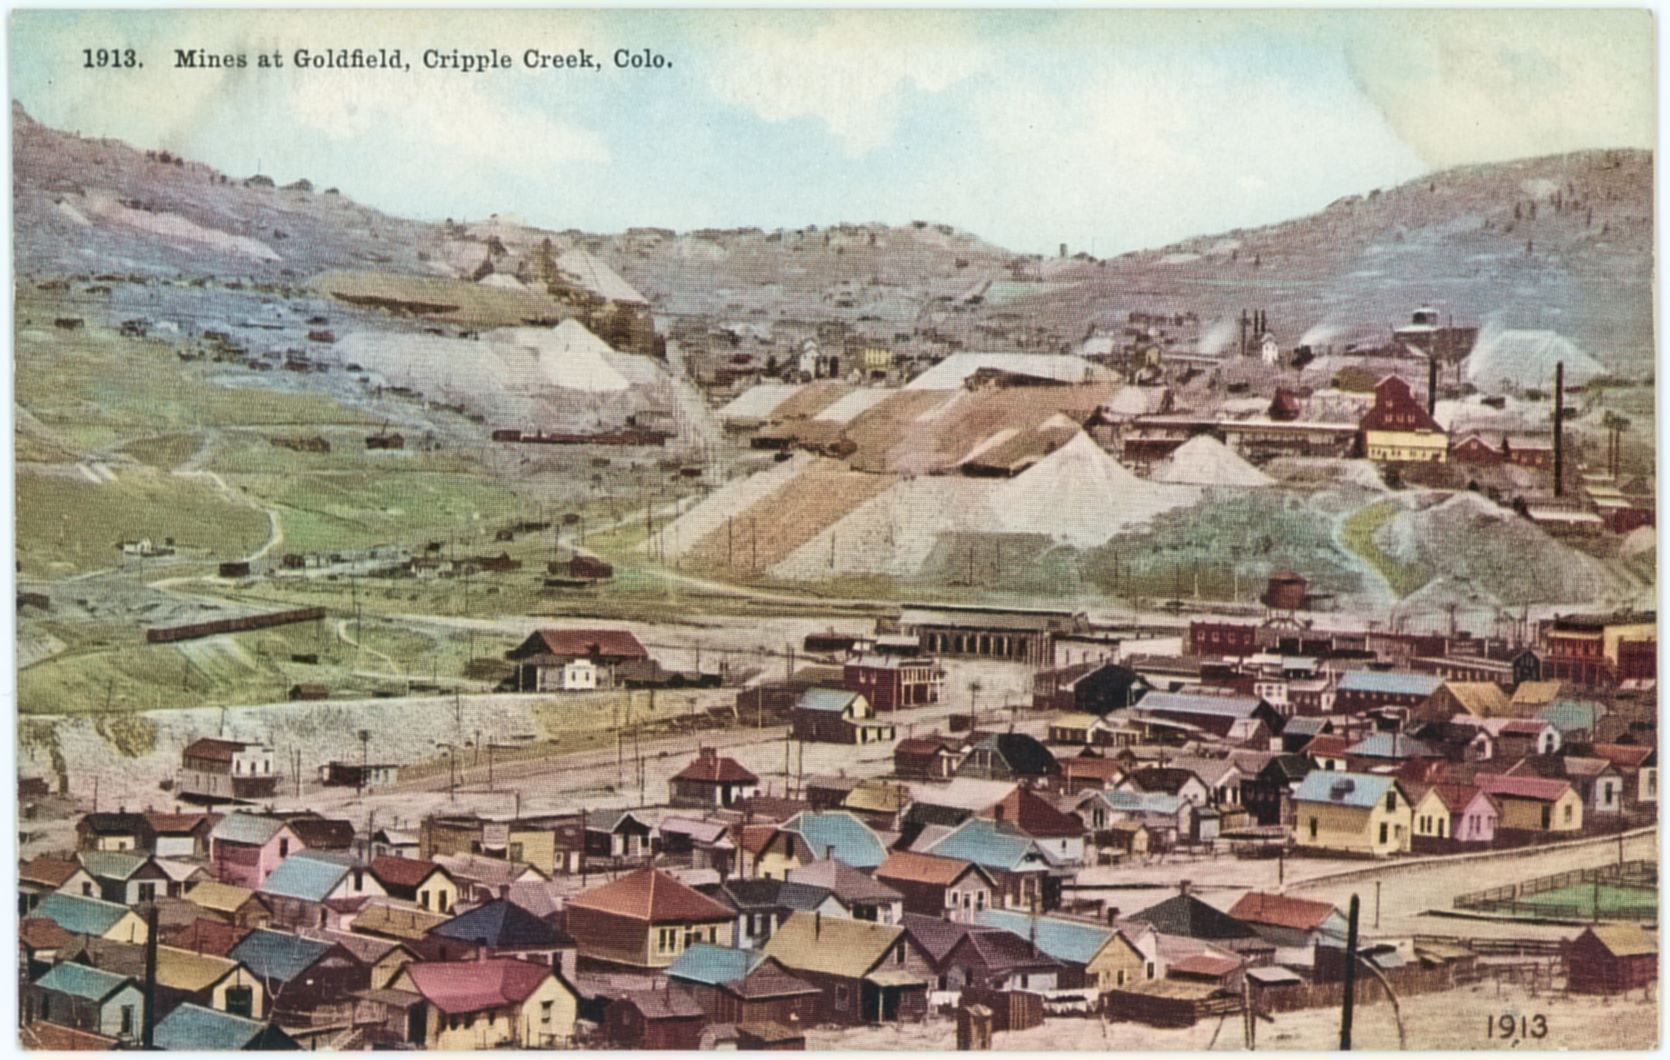 Mines at Goldfield, Cripple Creek, Colo.